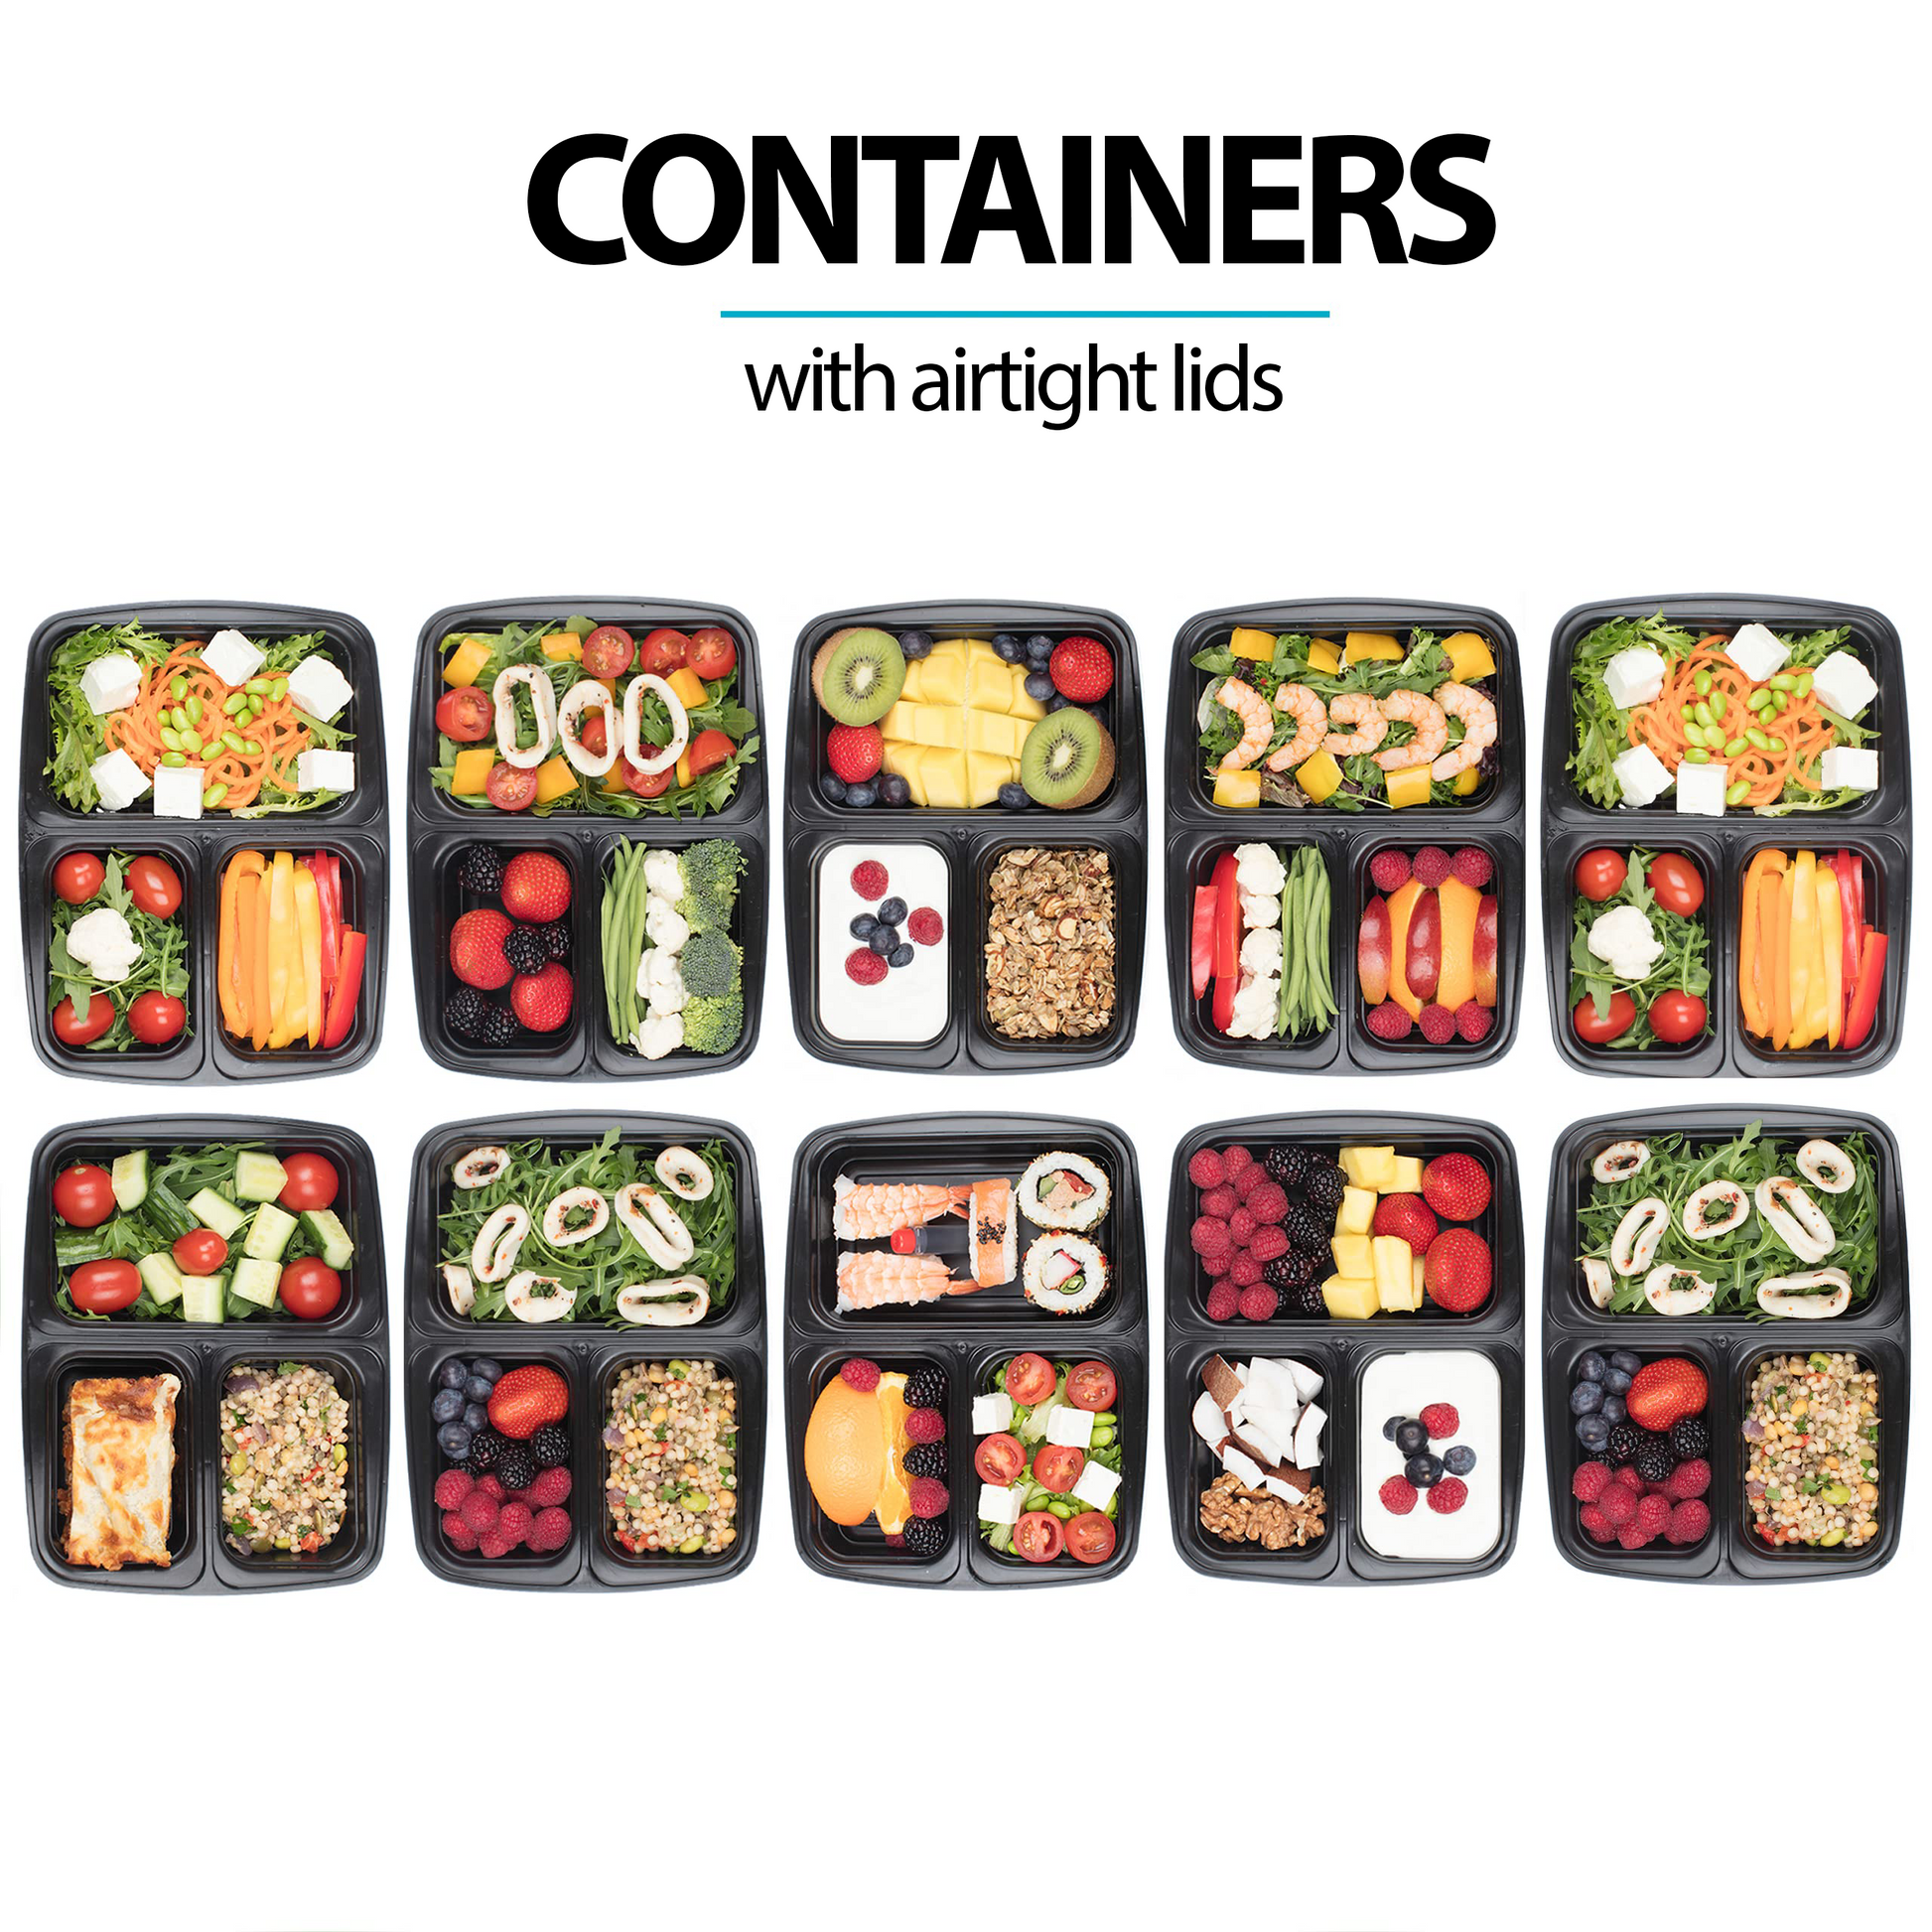 Asporto 26 oz Black Plastic 3 Compartment Food Container - with